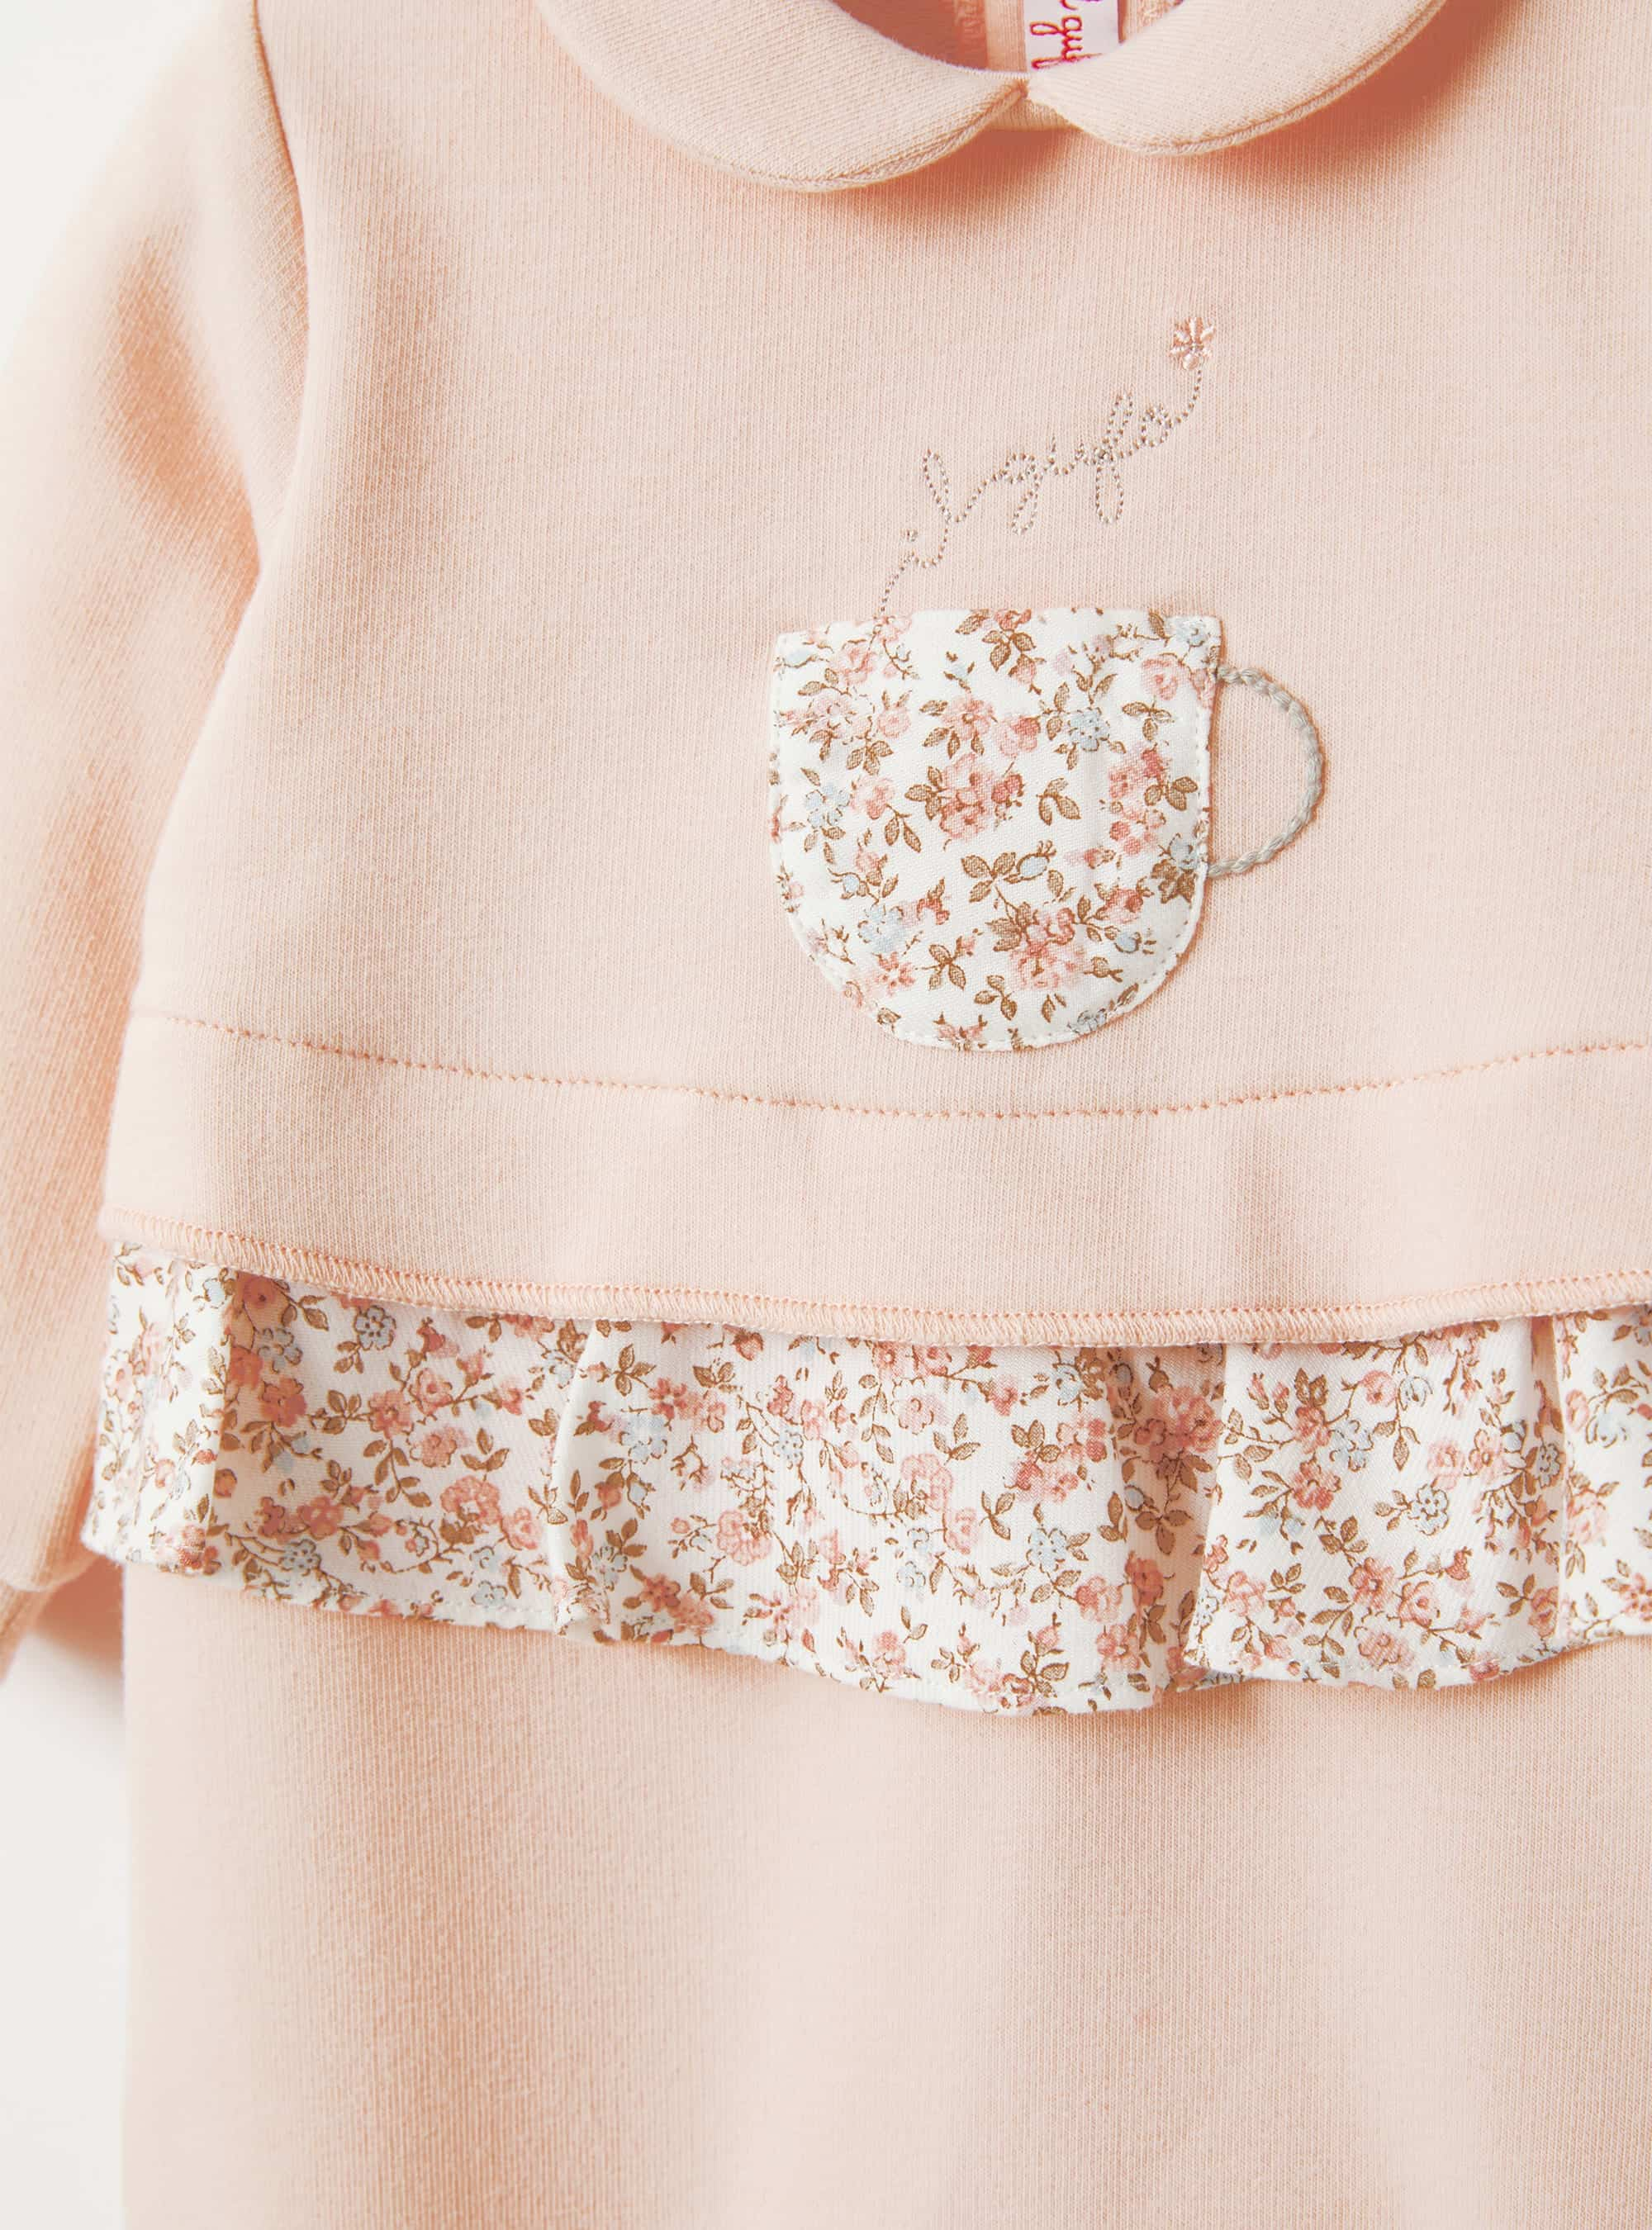 Fleece babysuit with floral print details - Pink | Il Gufo